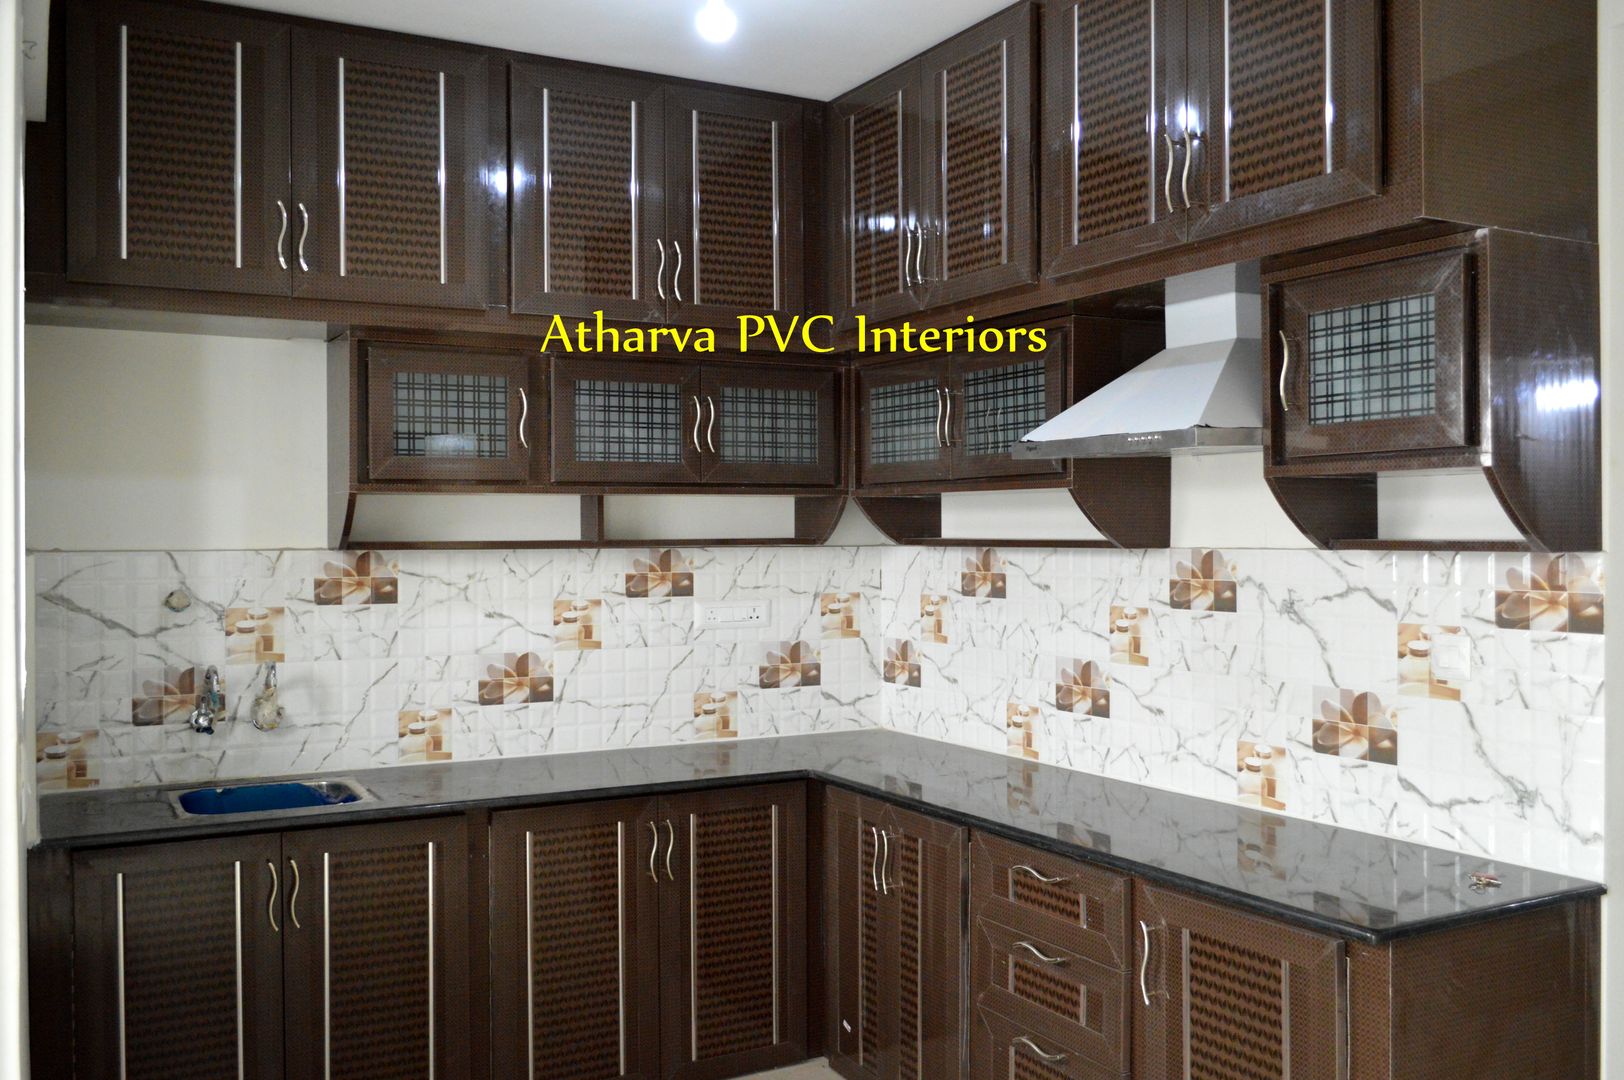 PVC Modular Kitchen cabinets, Atharva PVC Interiors Atharva PVC Interiors مطبخ بلاستيك رفوف وأدراج